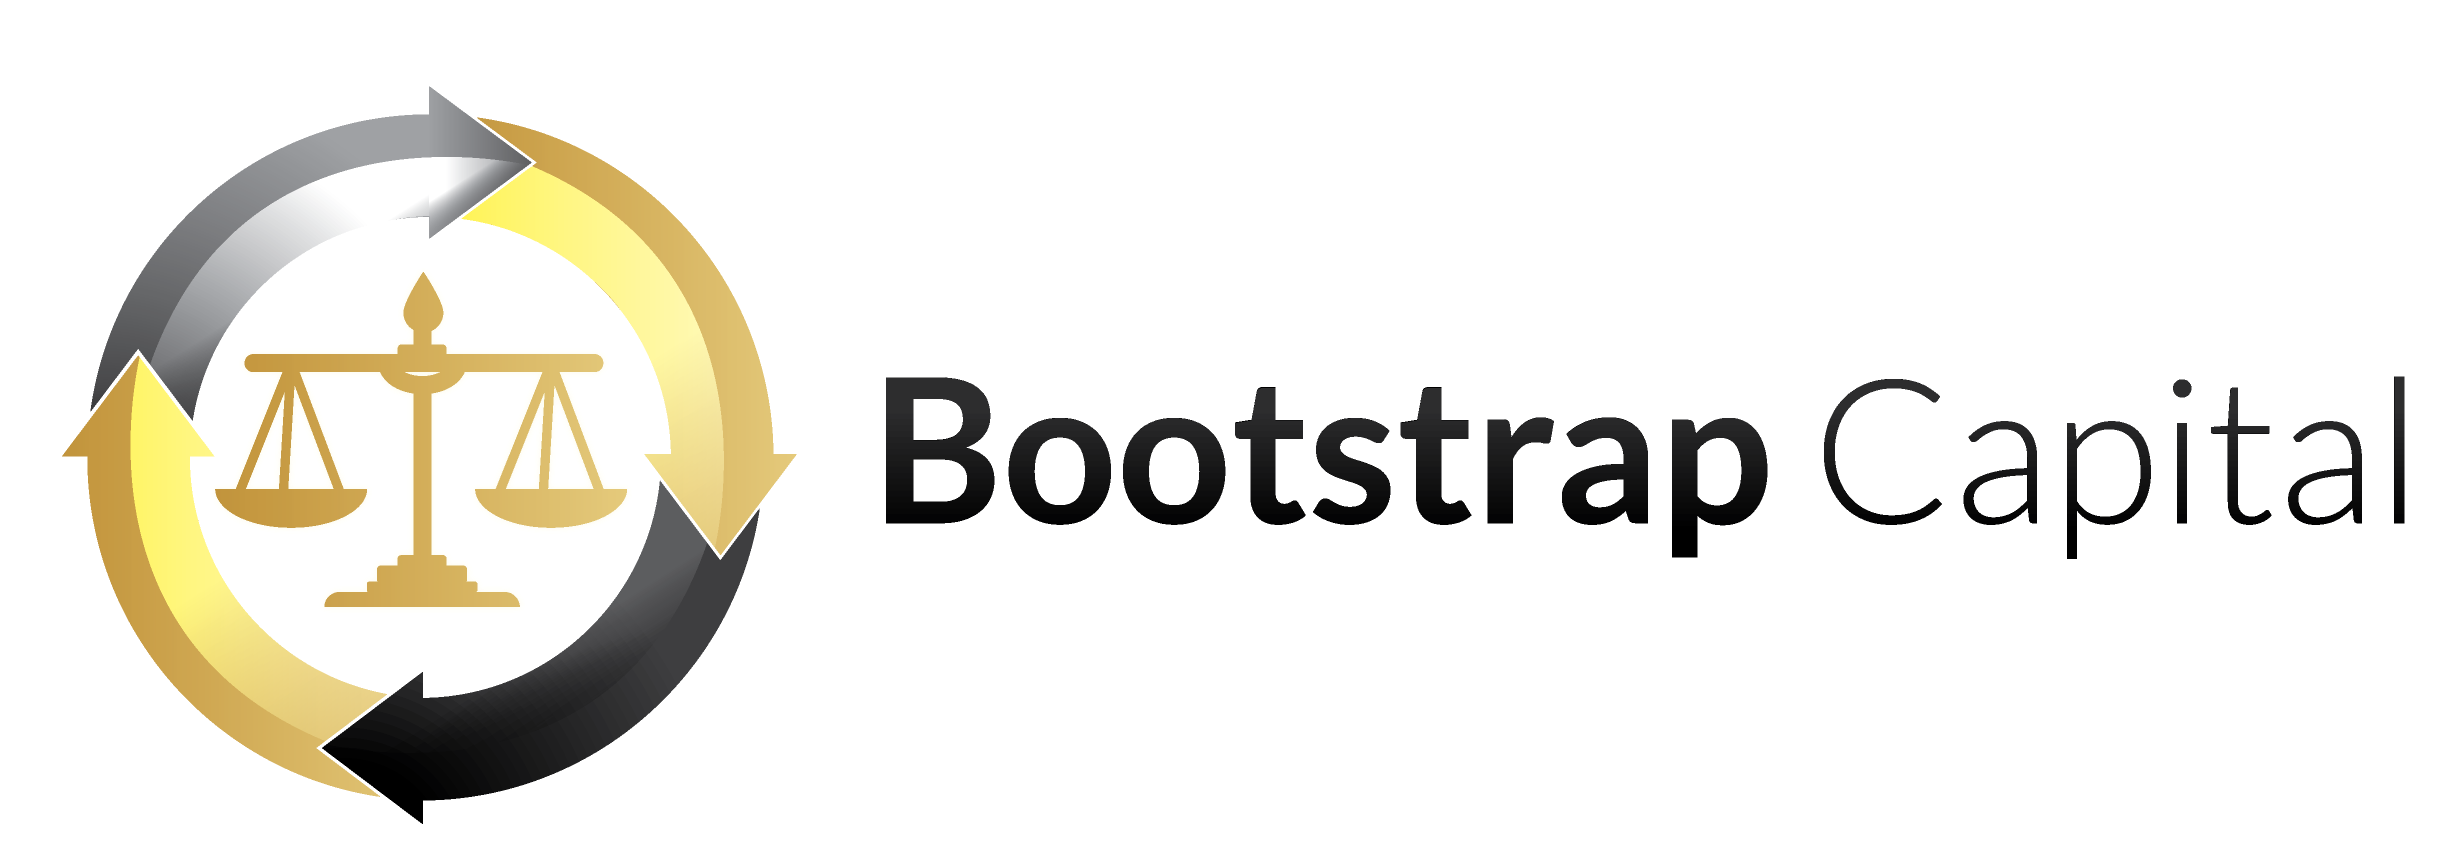 Bootstrap Capital logo